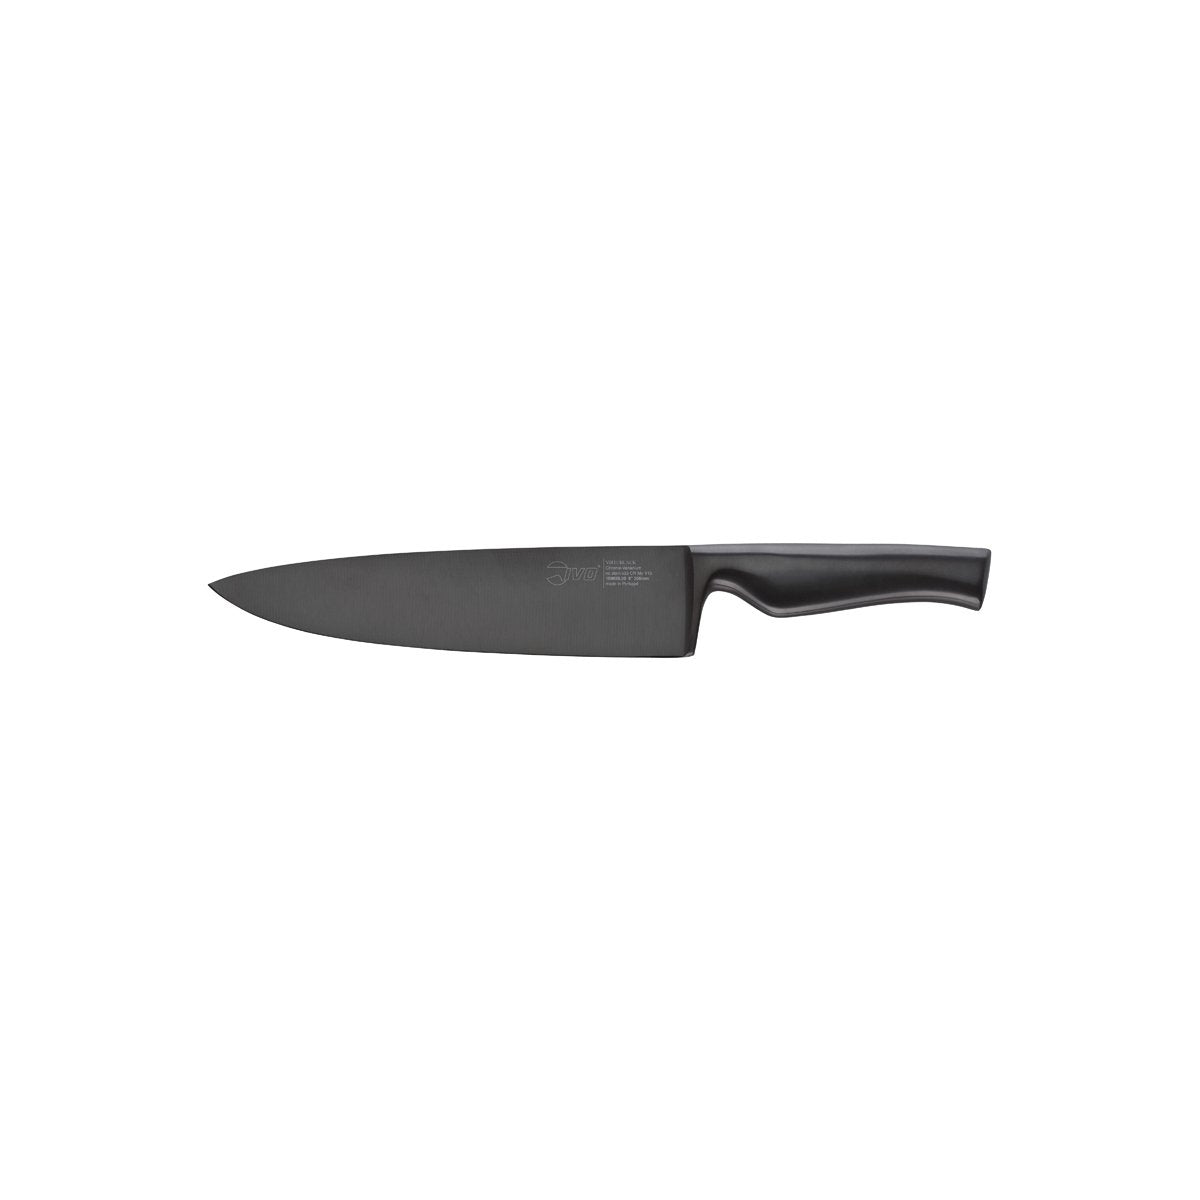 26087 Ivo Virtu Chefs Knife Black 205mm Tomkin Australia Hospitality Supplies